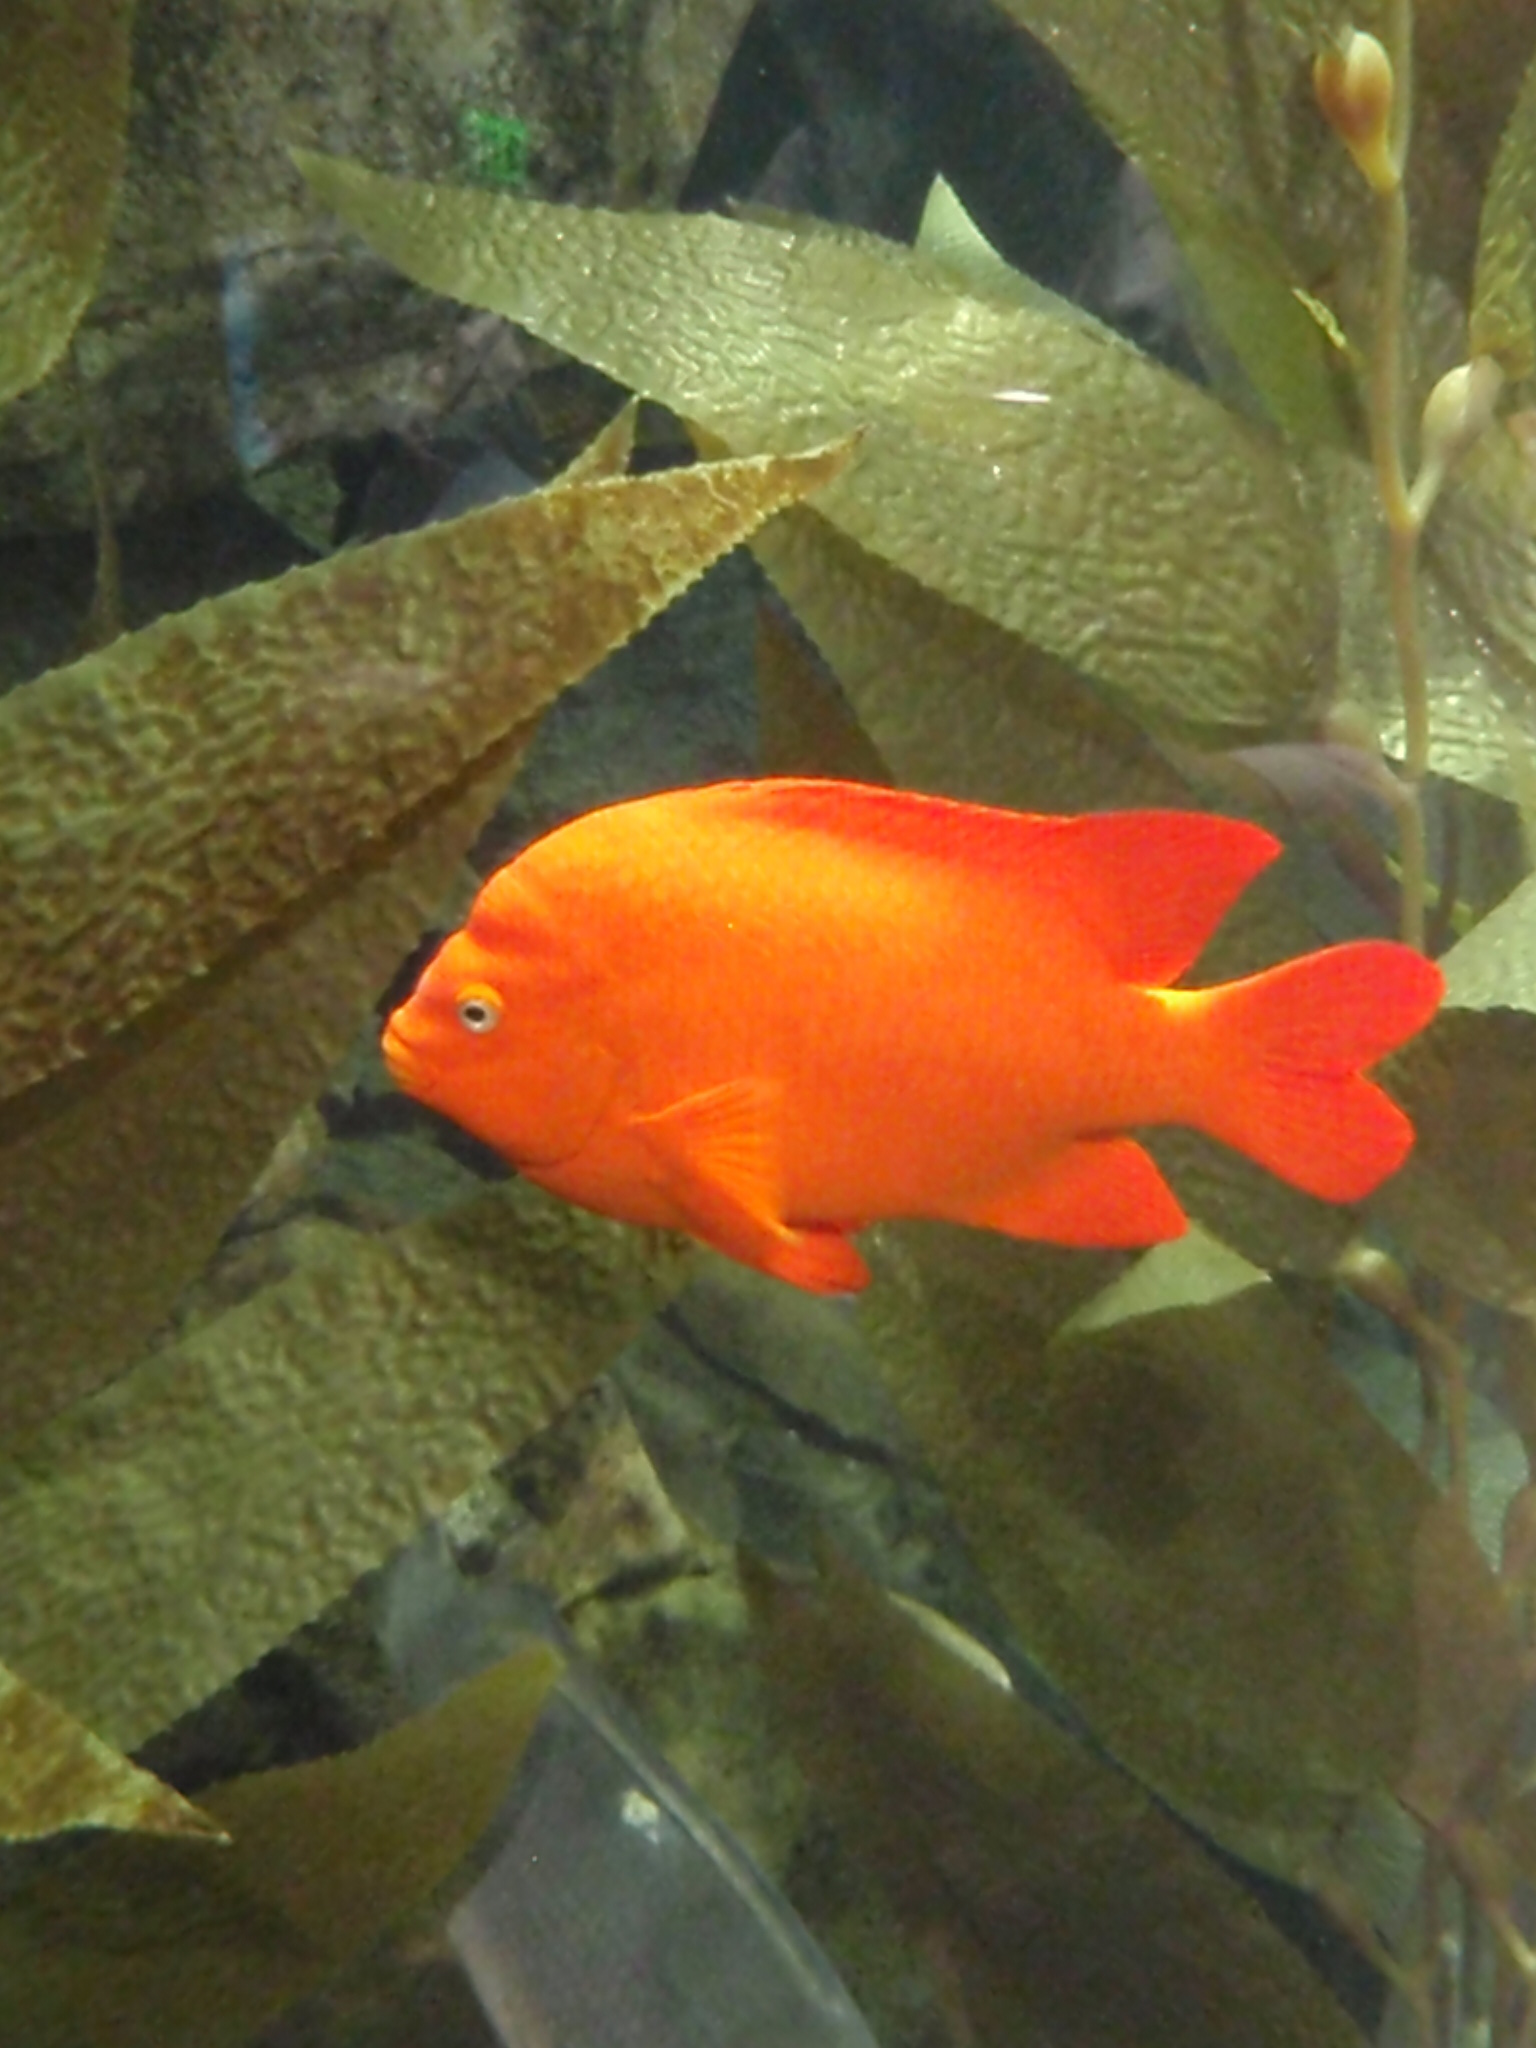 an orange fish in water near green leaves